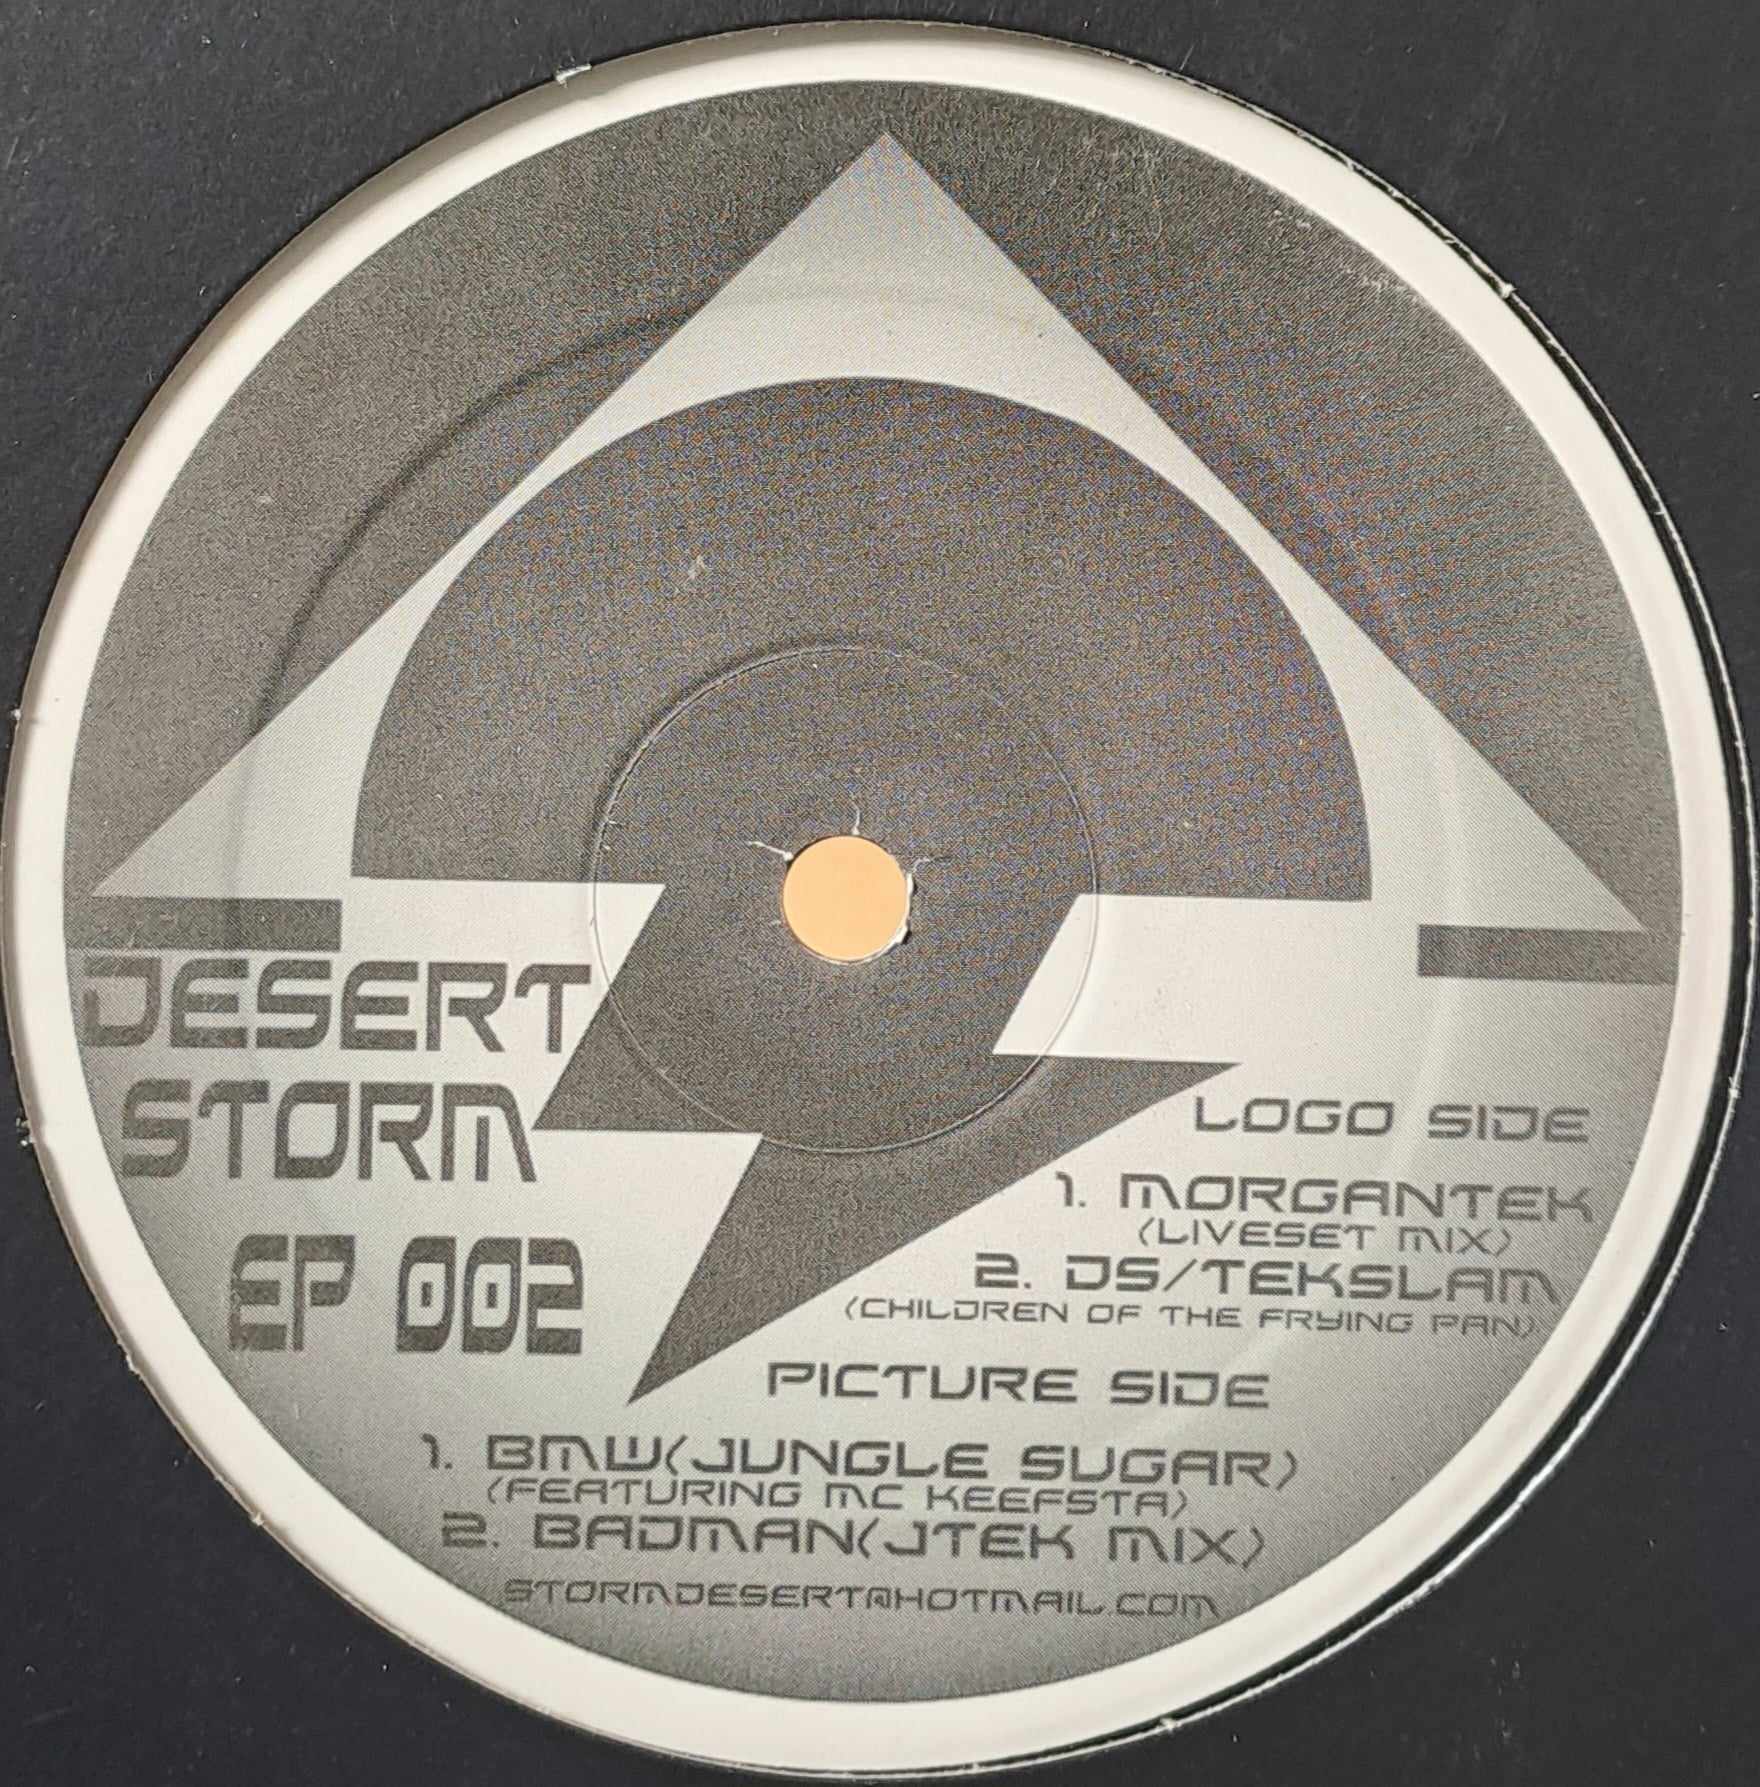 Desert Storm EP 002 - vinyle Breakbeat
